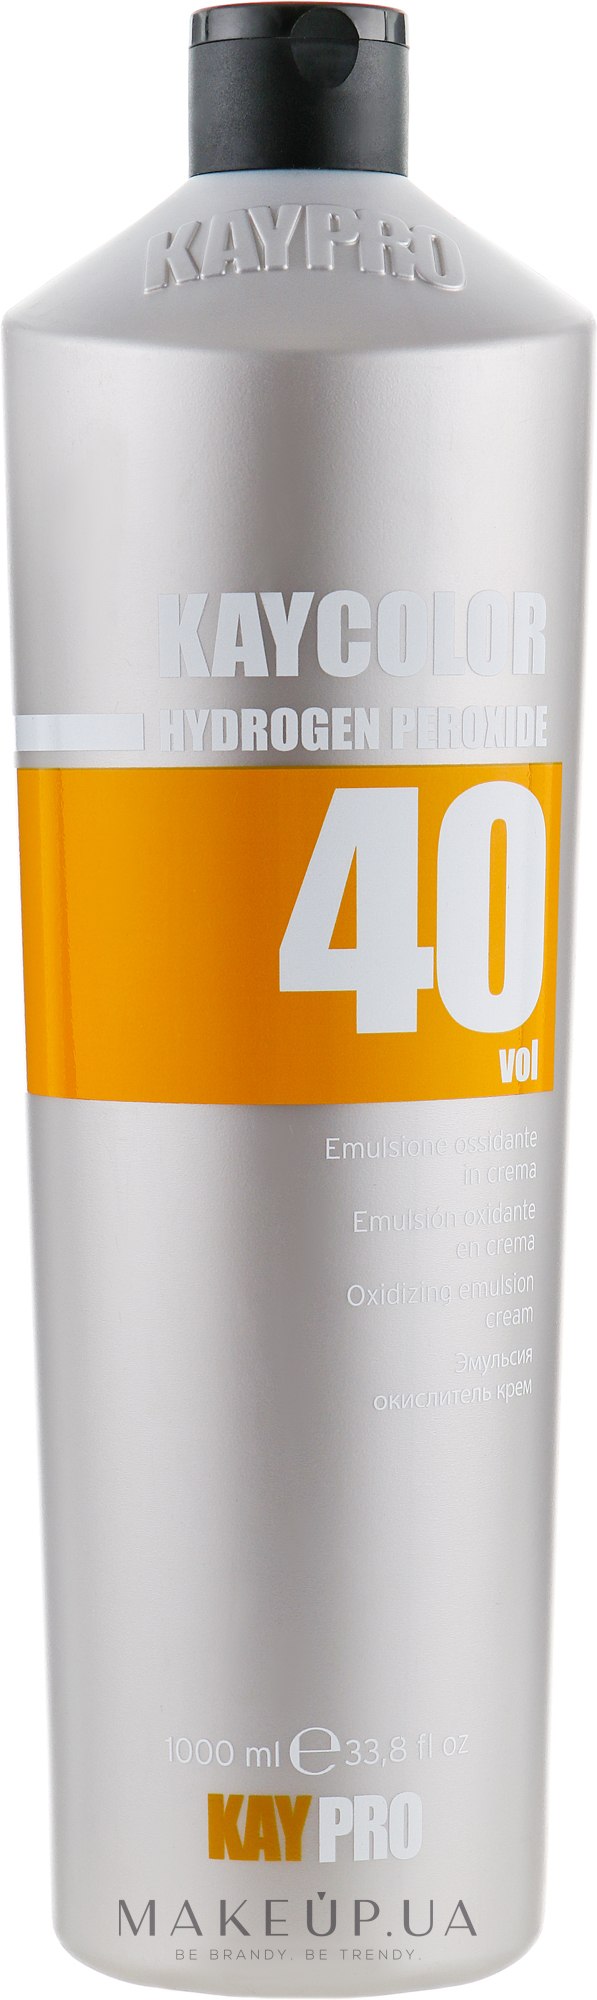 Окислитель 40VOL - KayPro KayColor Hydrogen Peroxide — фото 1000ml